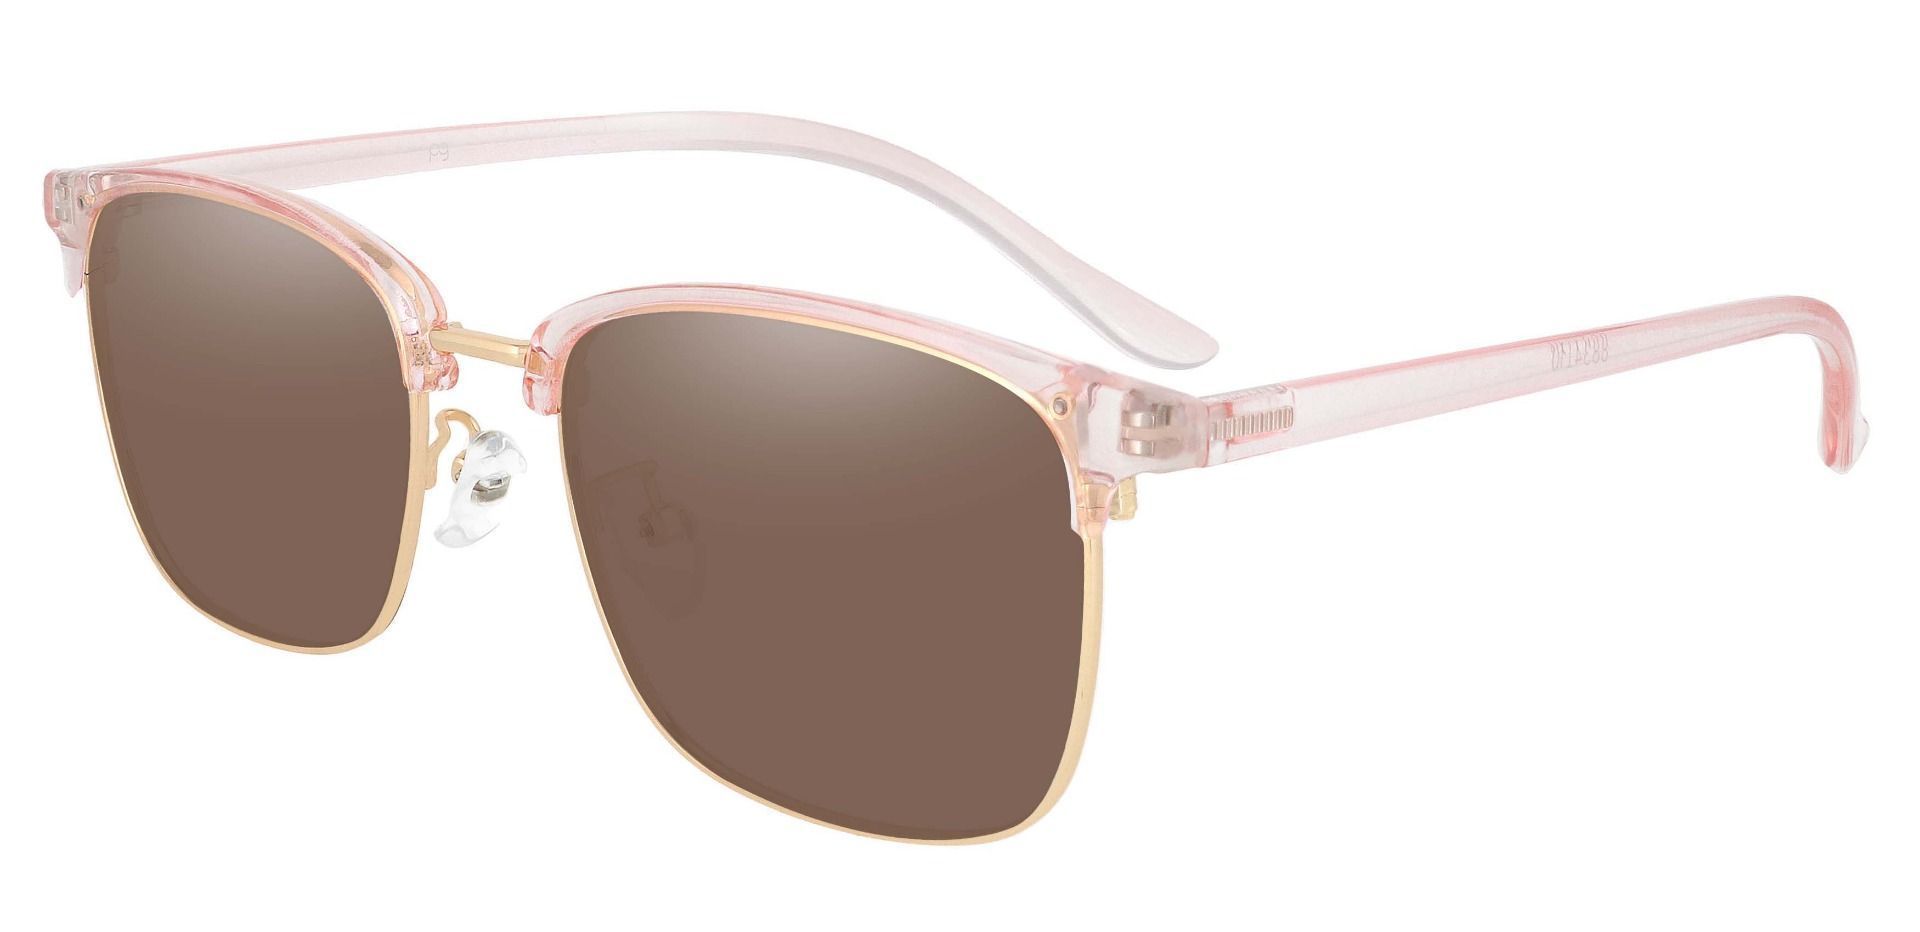 Simcoe Browline Prescription Sunglasses - Pink Frame With Brown Lenses